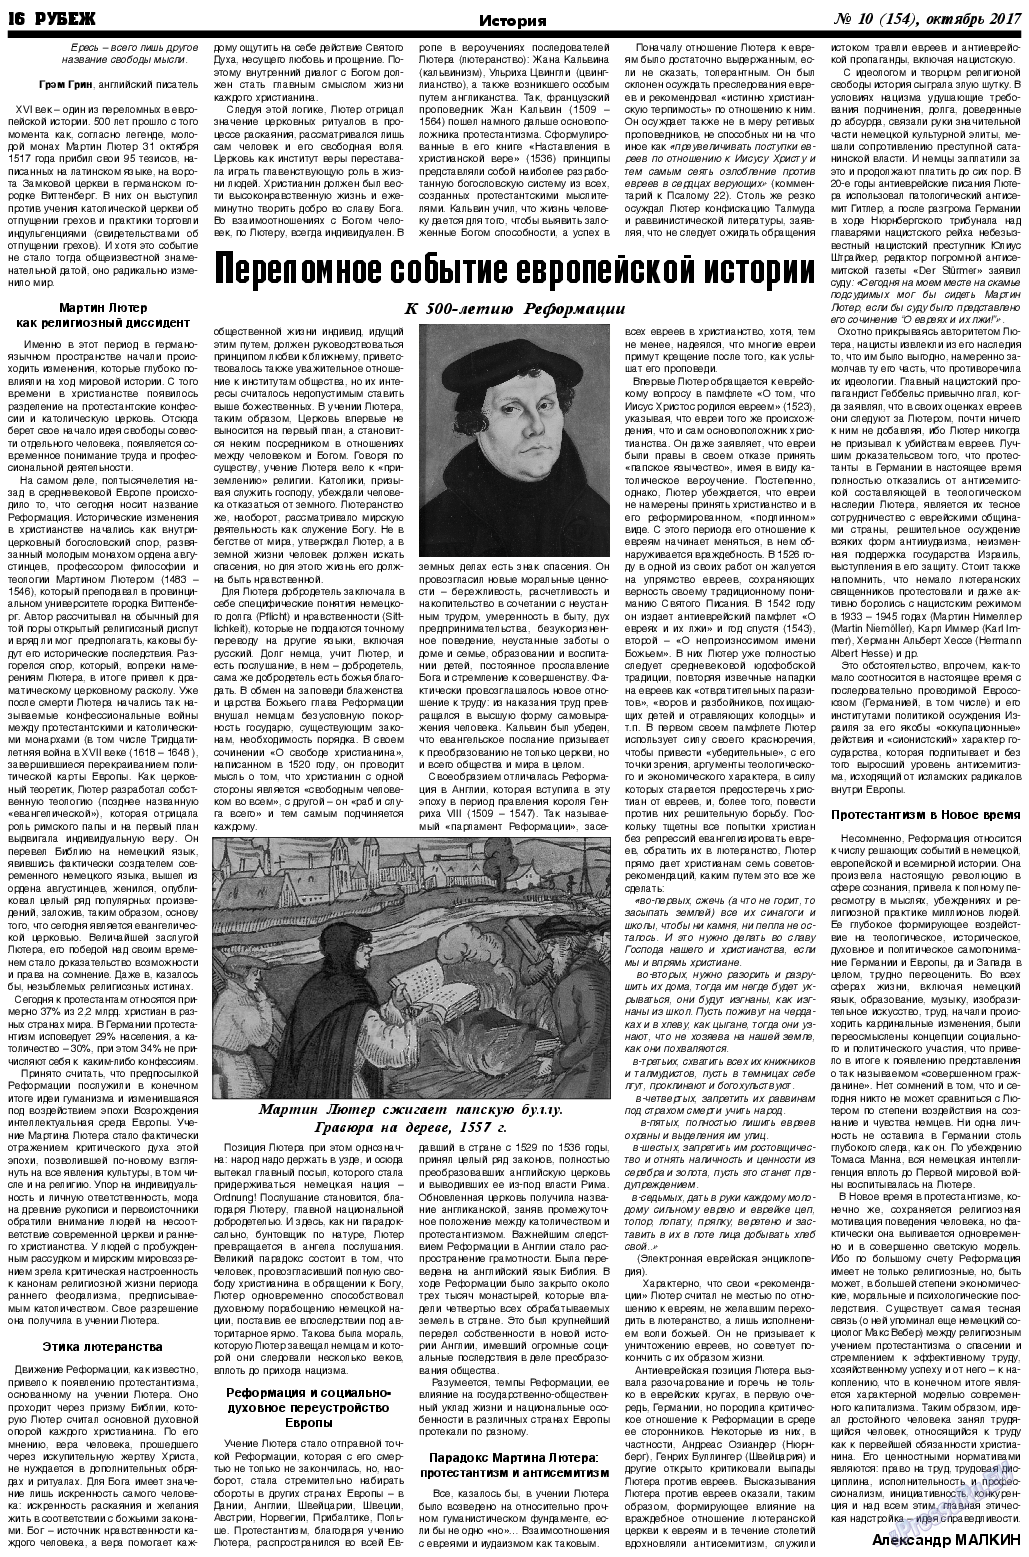 Рубеж, газета. 2017 №10 стр.16